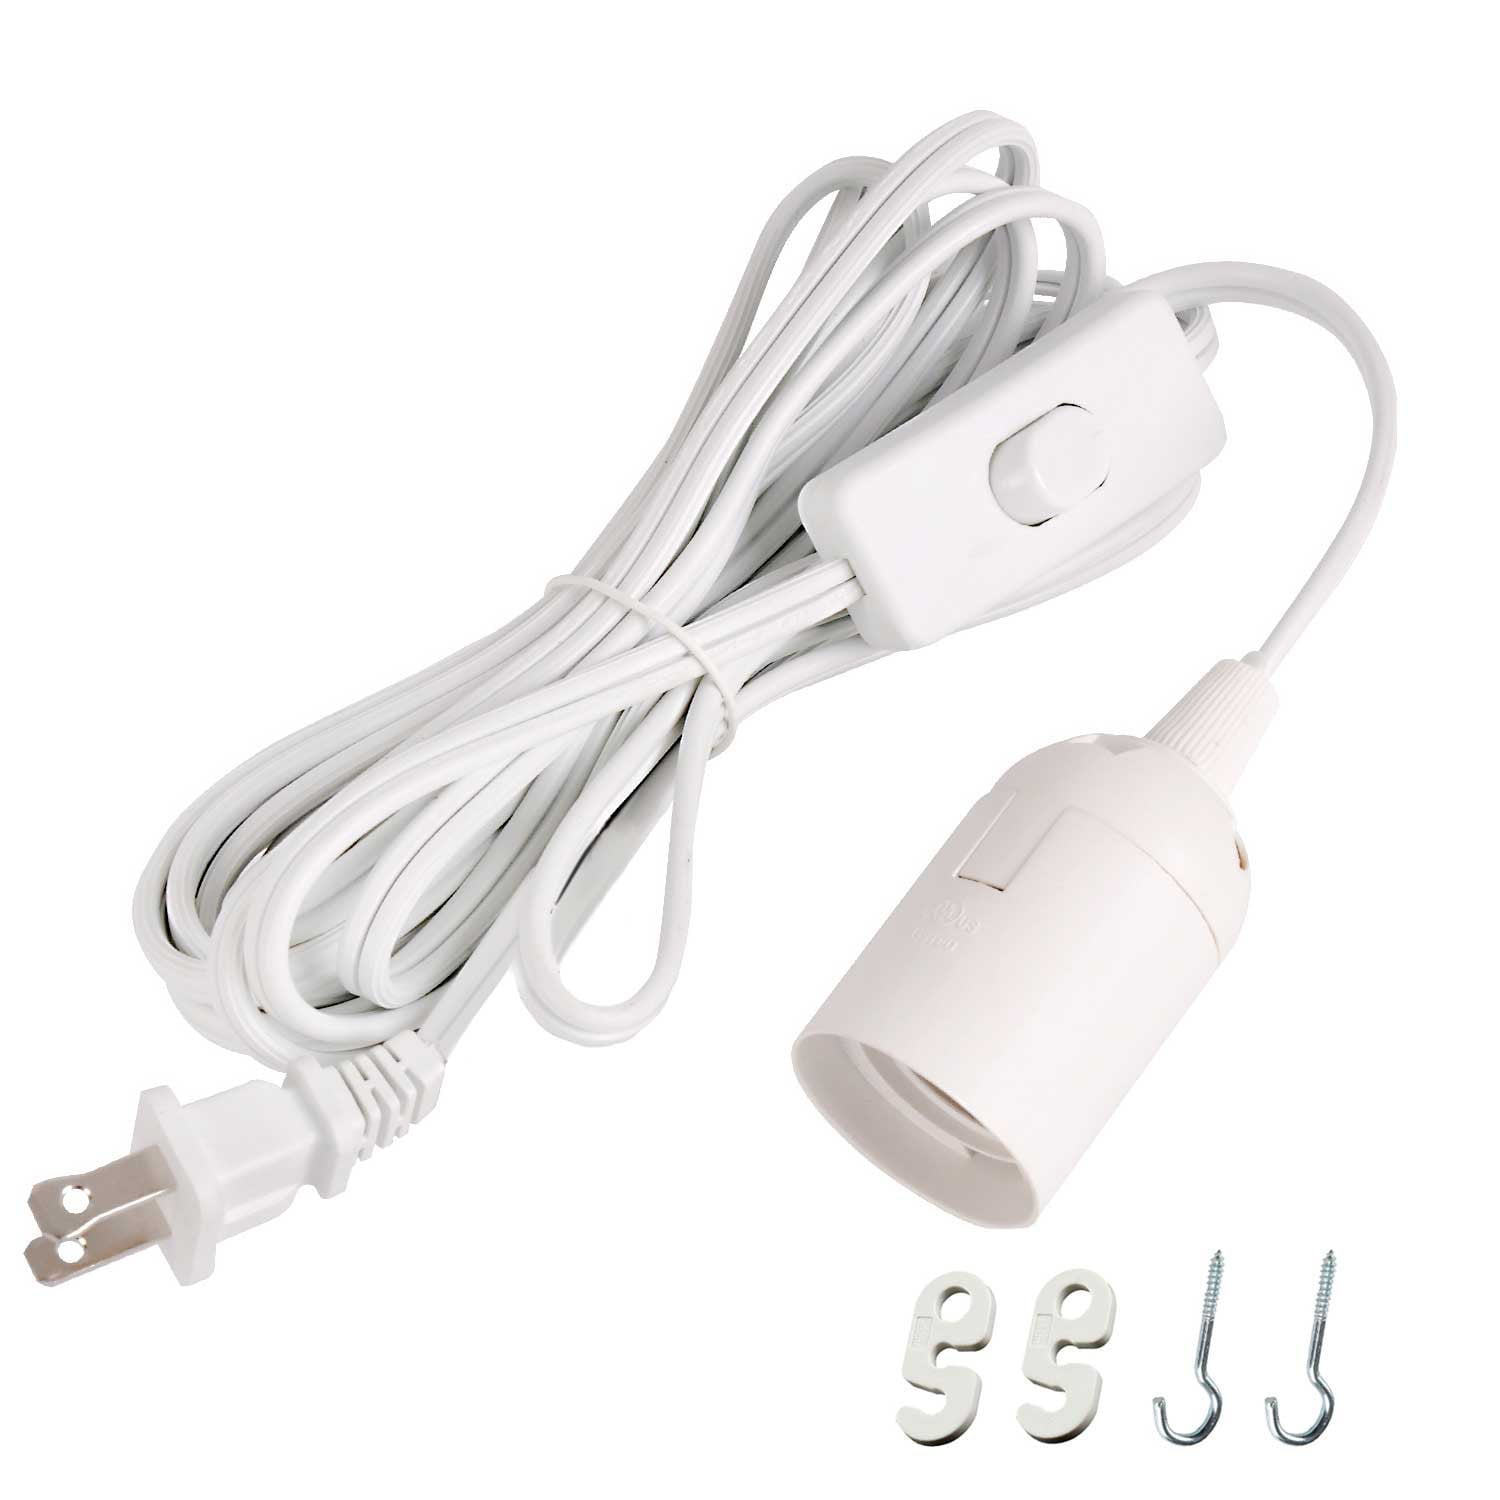 Hanging Pendant Light Plug-in On/Off Switch Cord Lights Socket Lamp Bulb Holder 